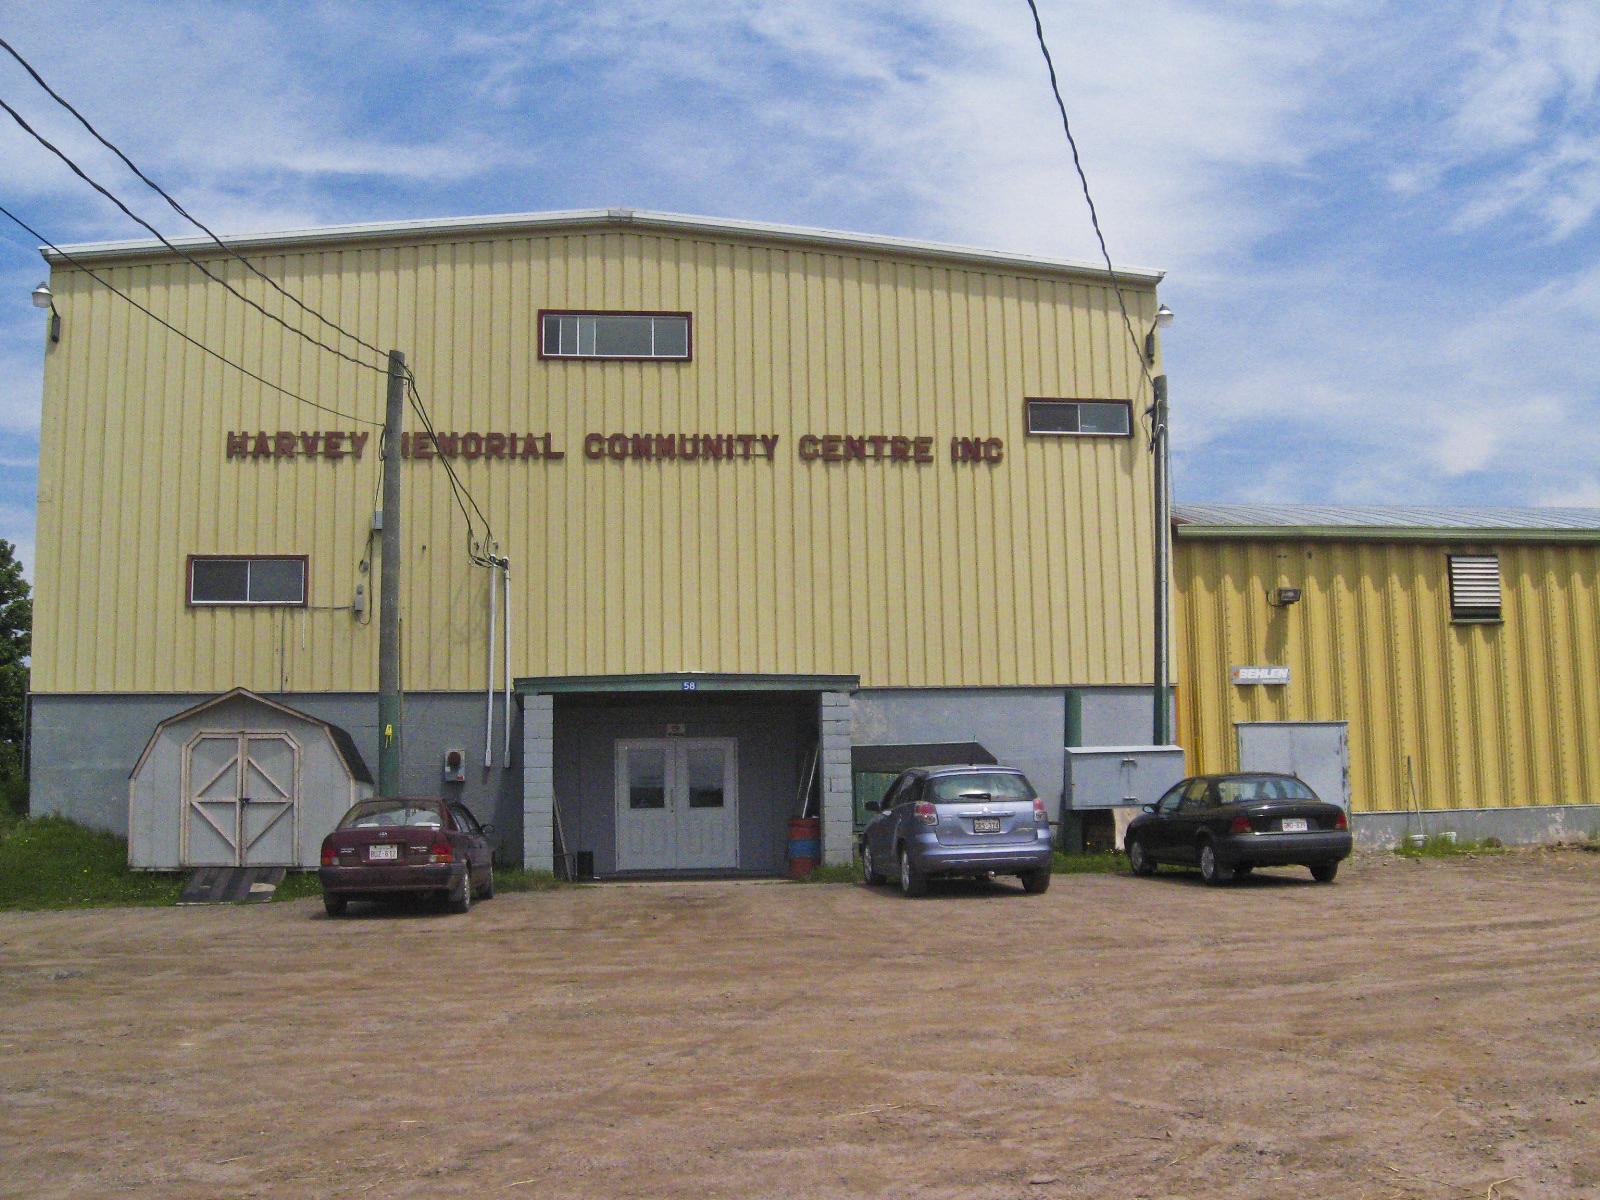 Harvey Memorial Community Center